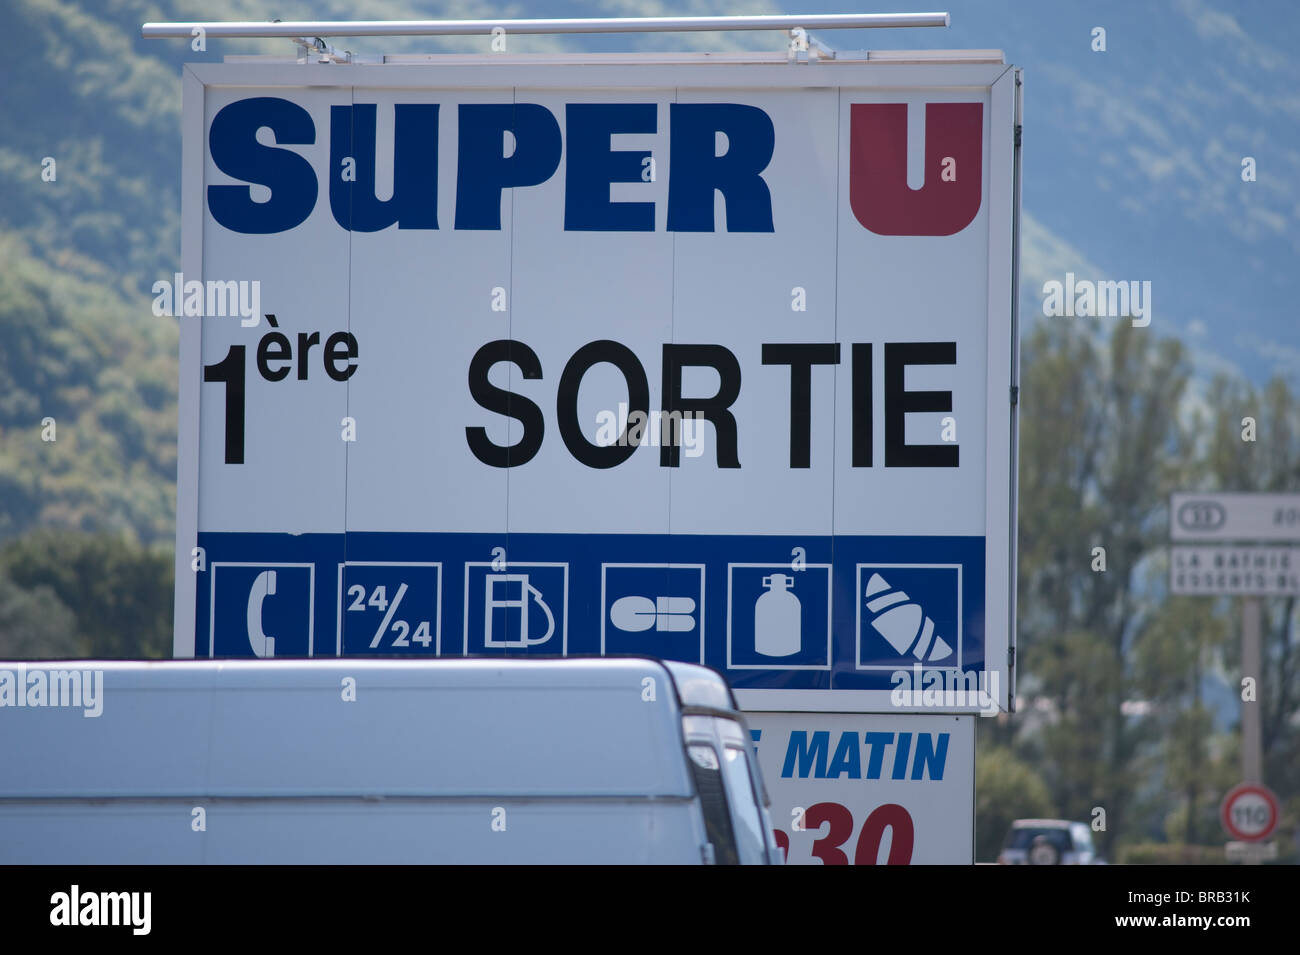 Super U supermarket sign in alpine France Stock Photo